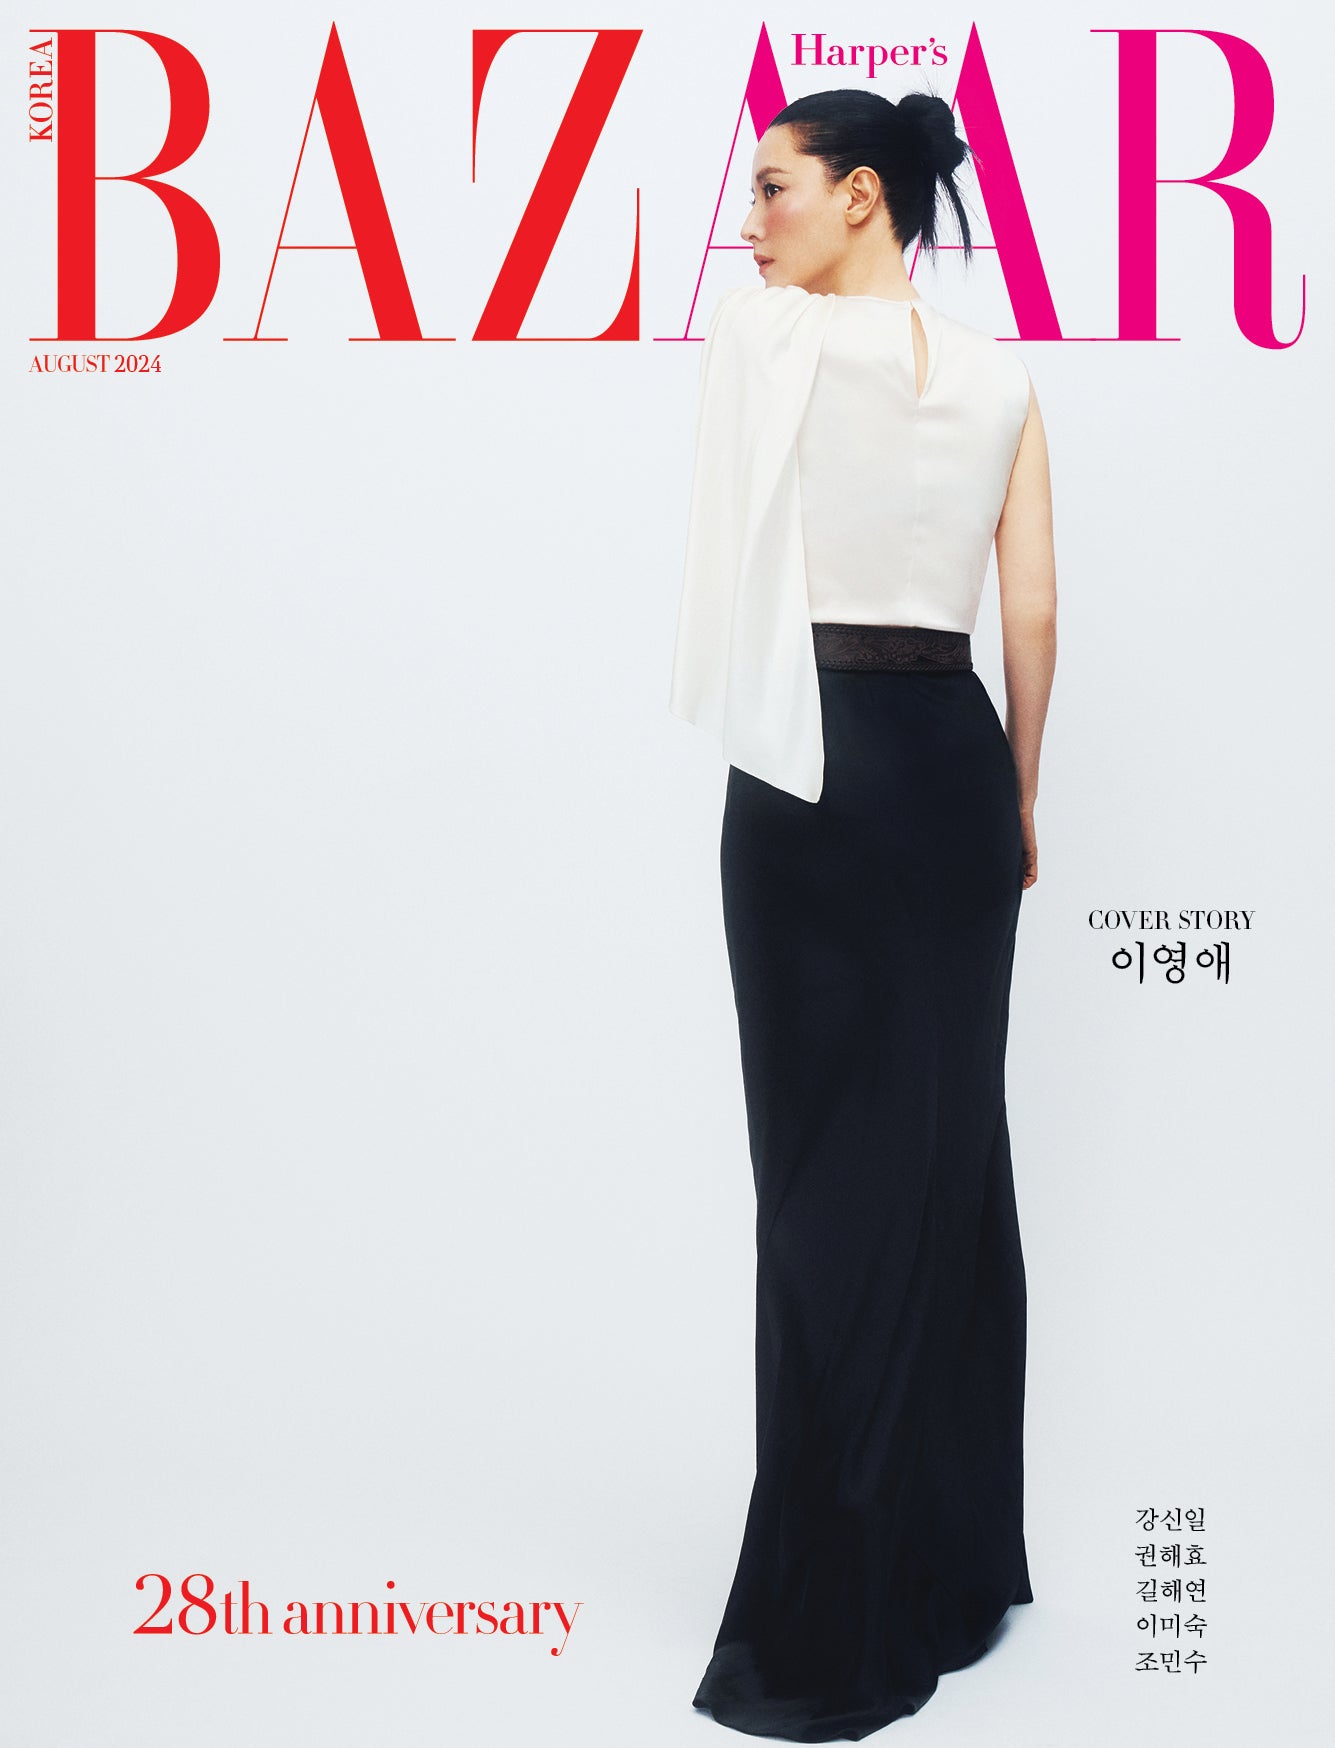 Harper's BAZAAR | 2024 AUG. | LEE YOUNG AE COVER - LEE JUN HO PHOTOSHOOT